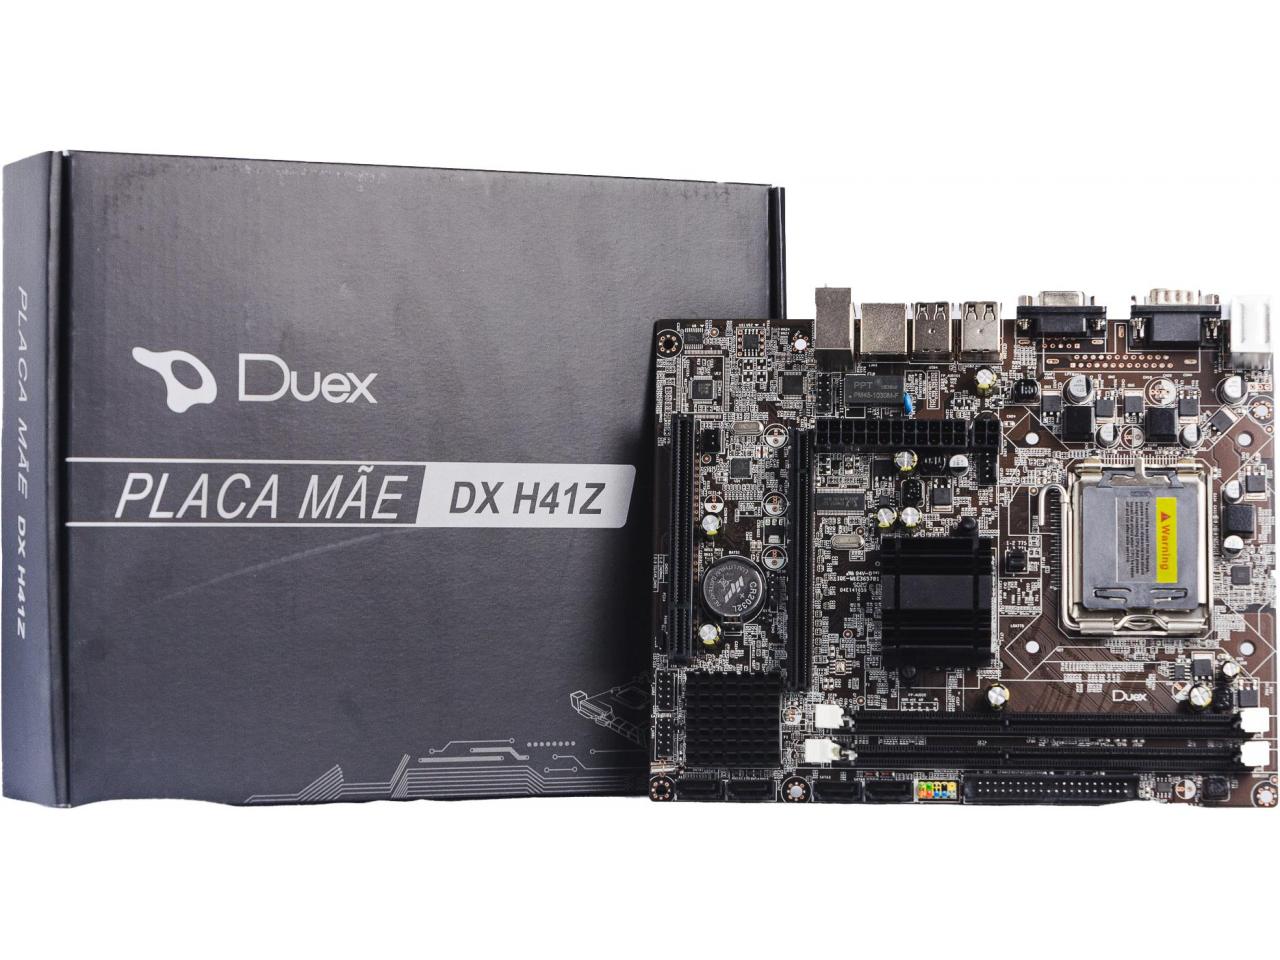 Placa Mãe Duex DX-H41Z (Socket 775/Intel G41)